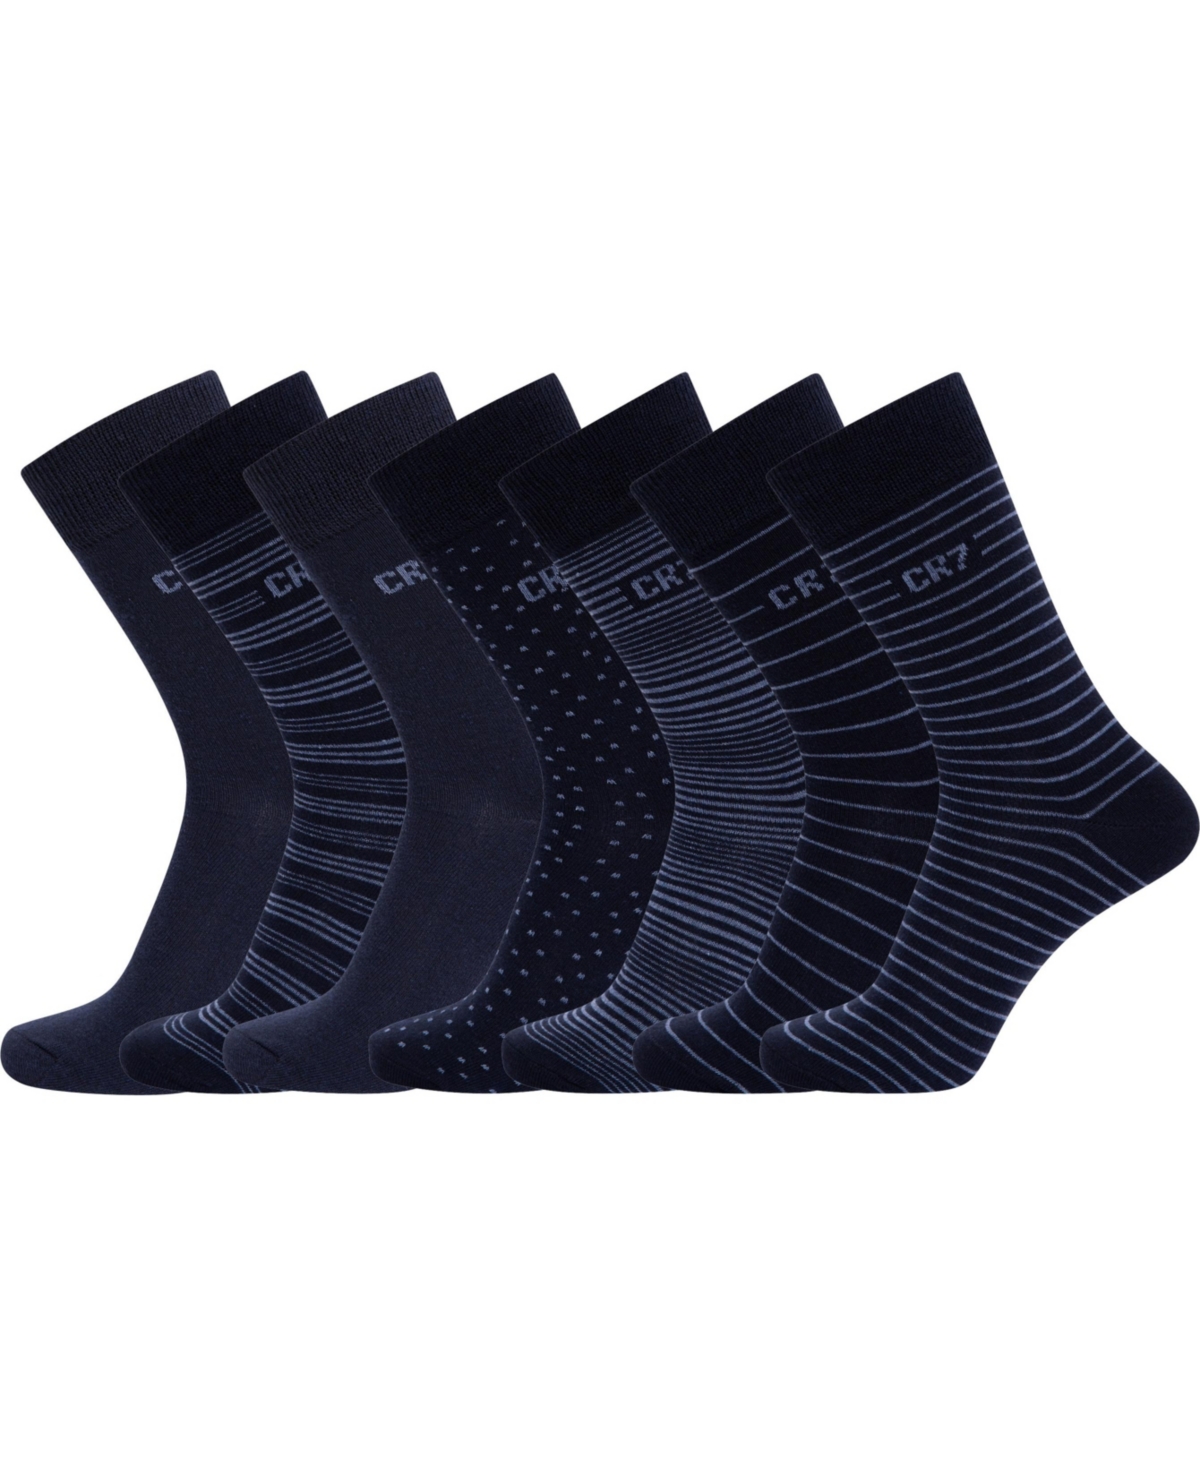 Men's Fashion Socks, Pack of 7 - Black, Blue